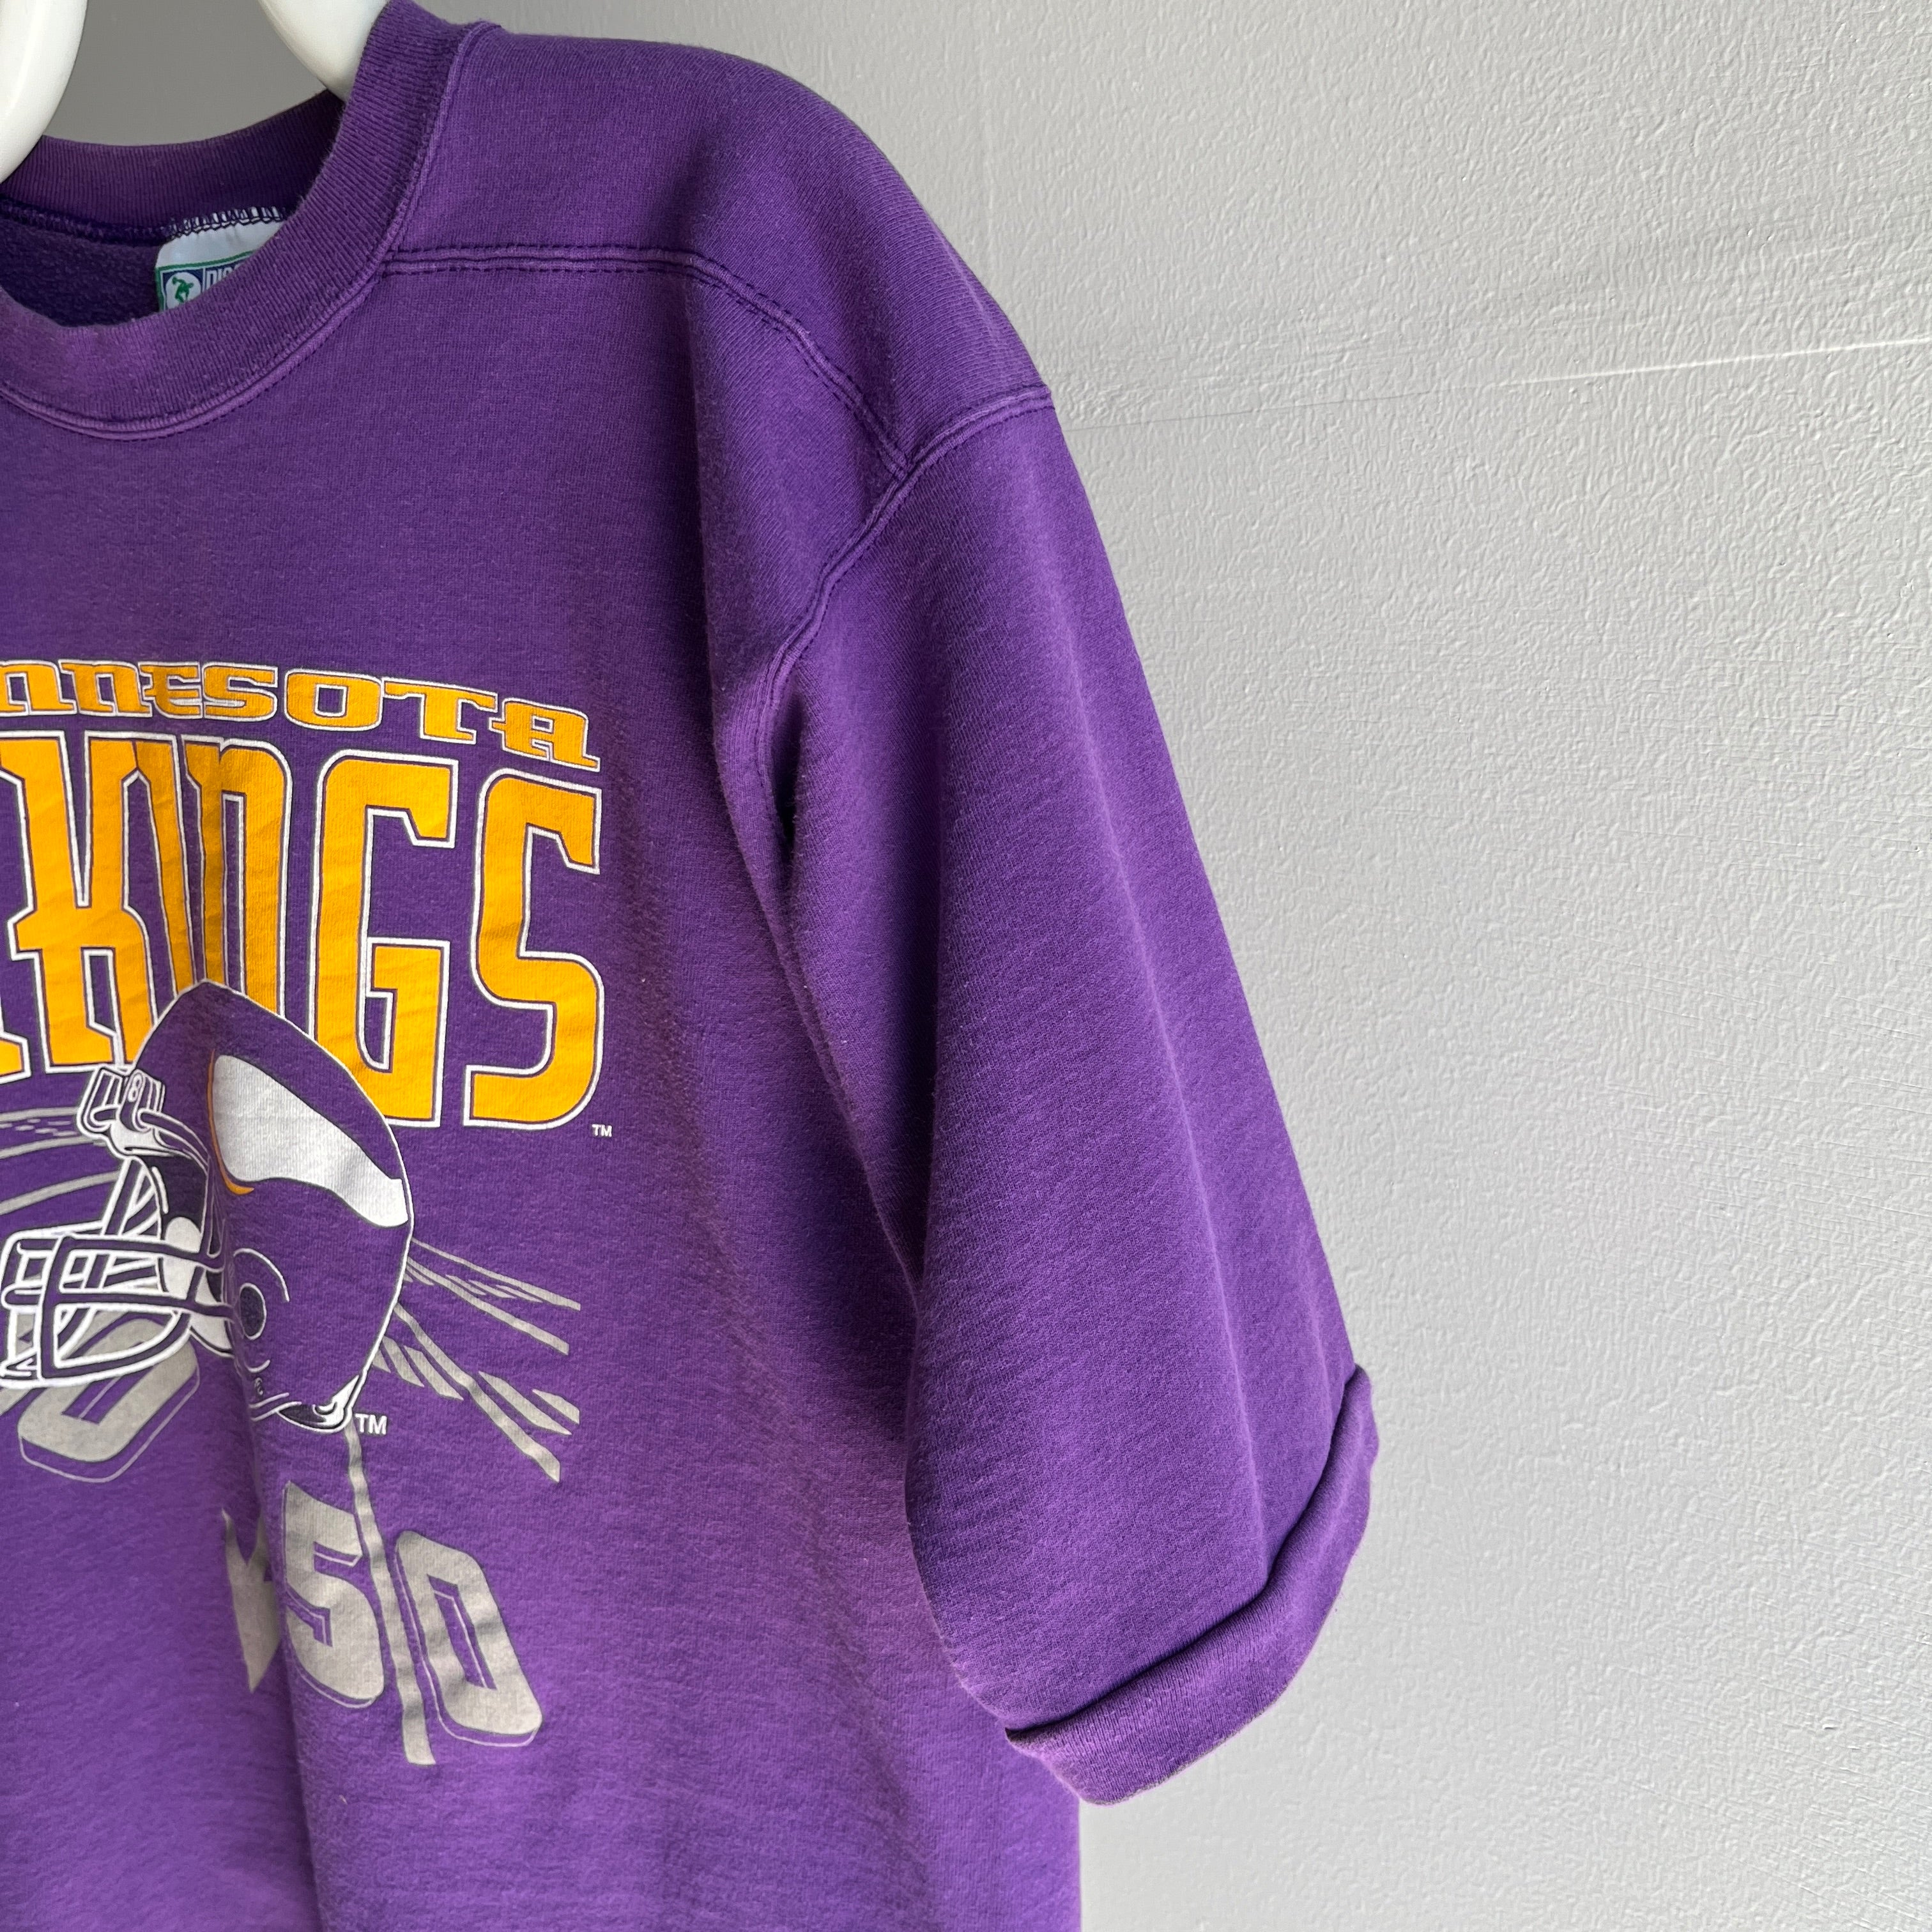 1980s Minnesota Vikings Cotton Sweatshirt by Discus